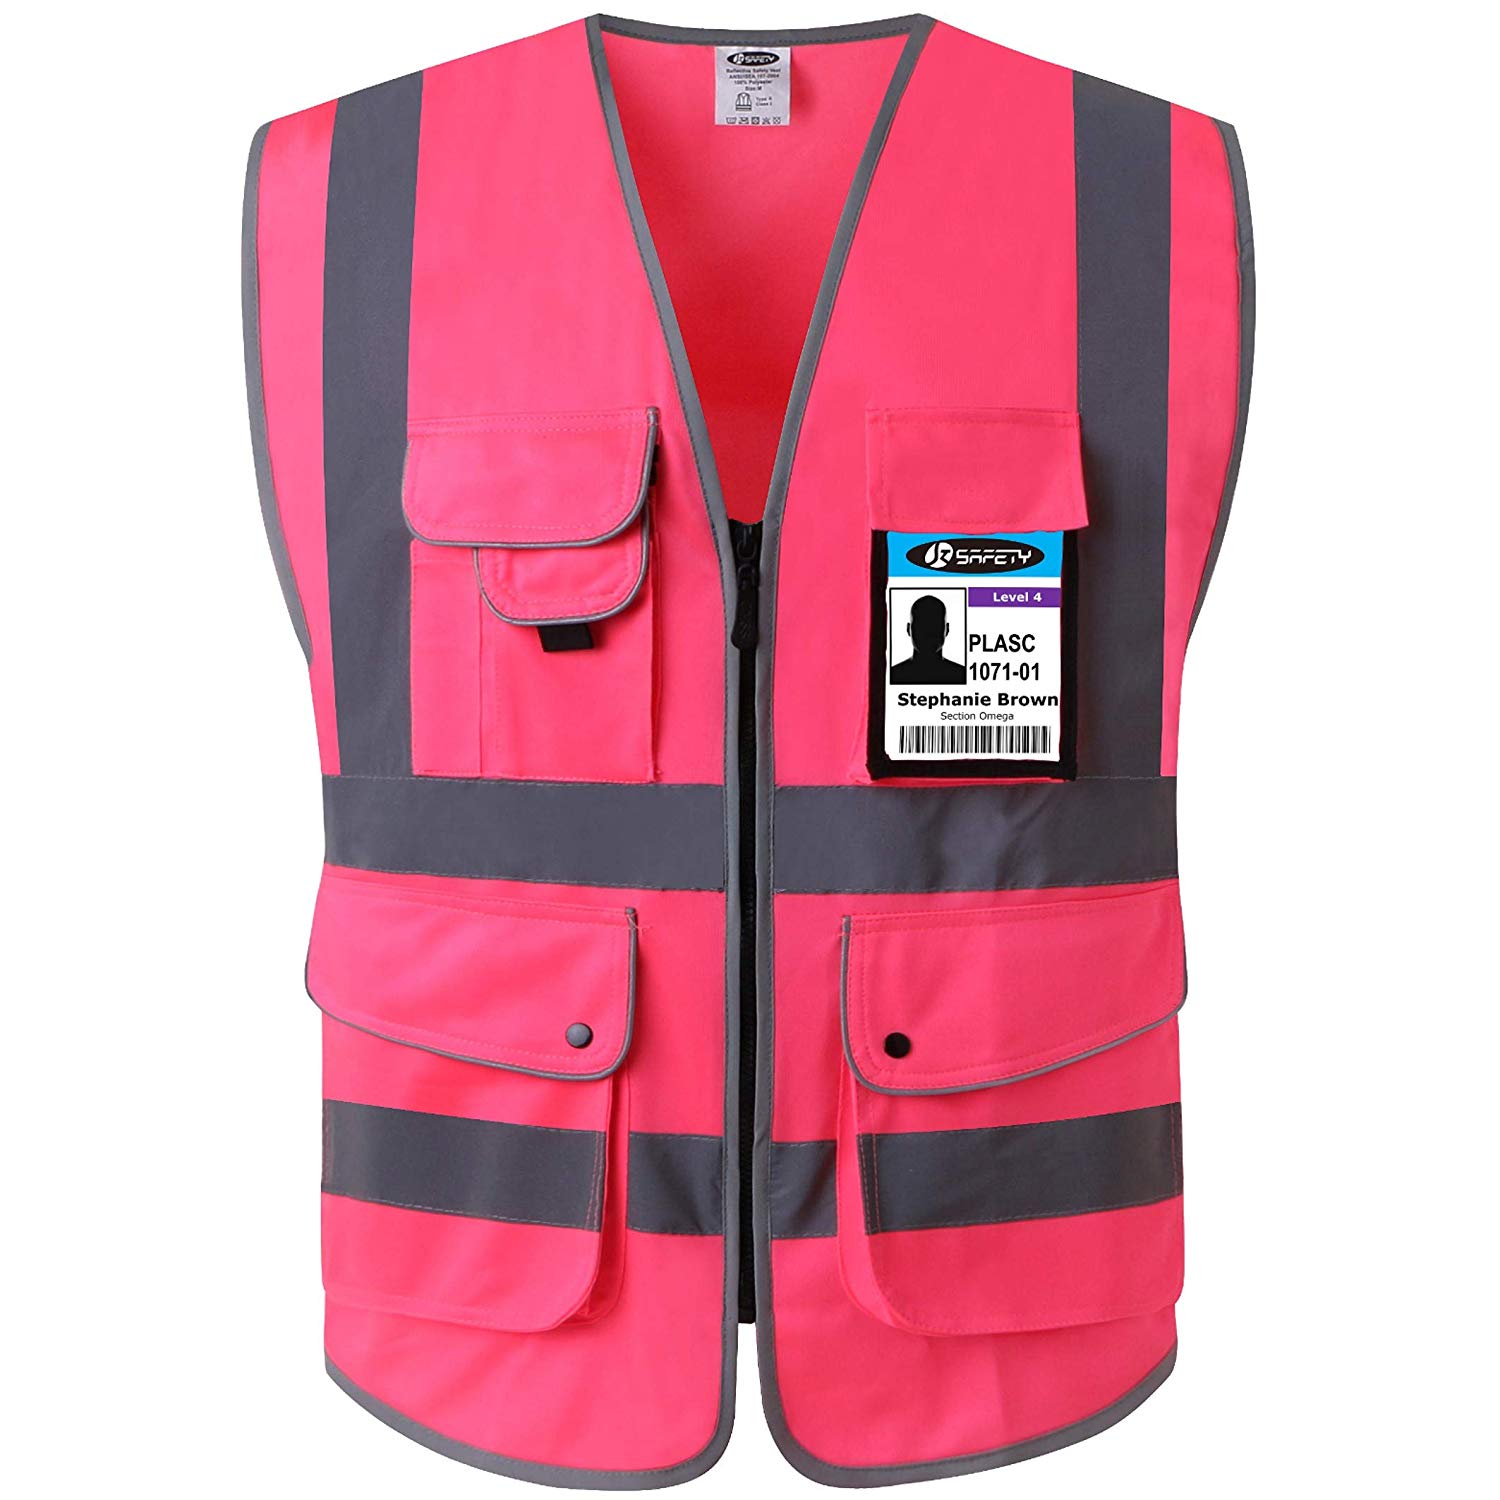 JKSafety Class 2 Reflective Safety Vest for Women 